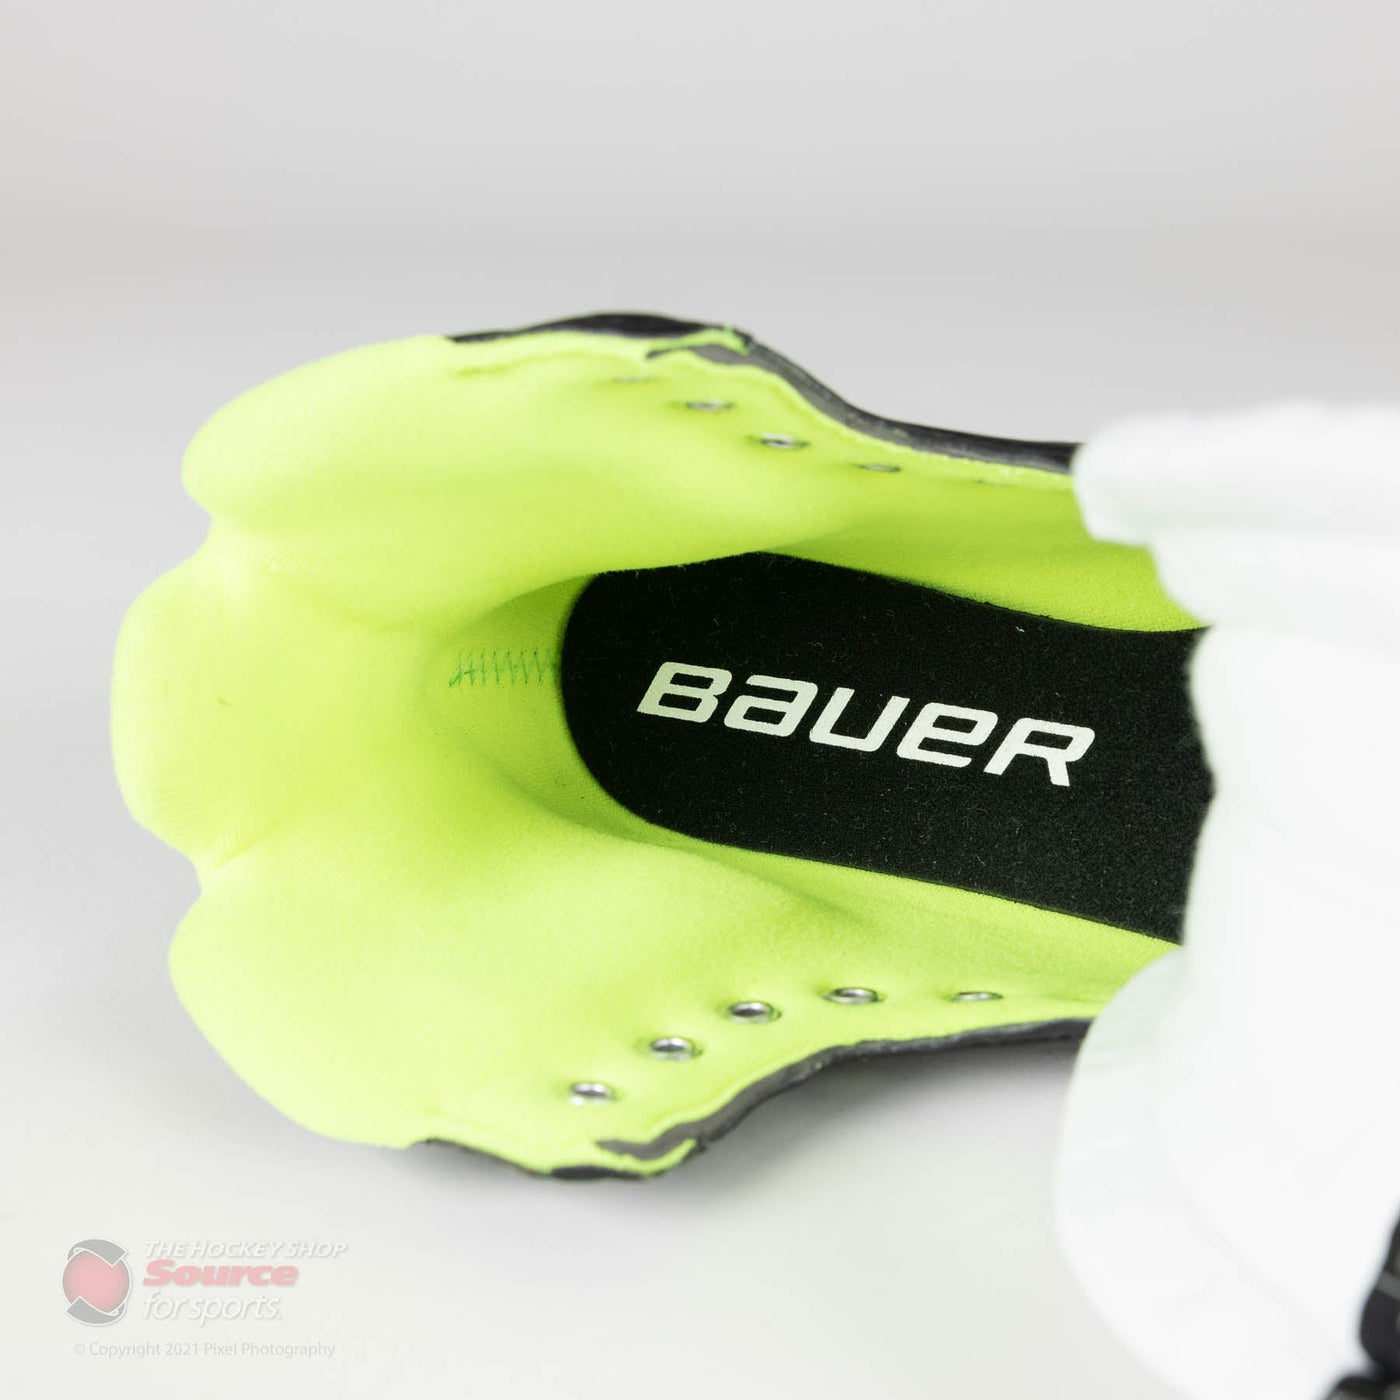 Bauer GSX Senior Goalie Skates